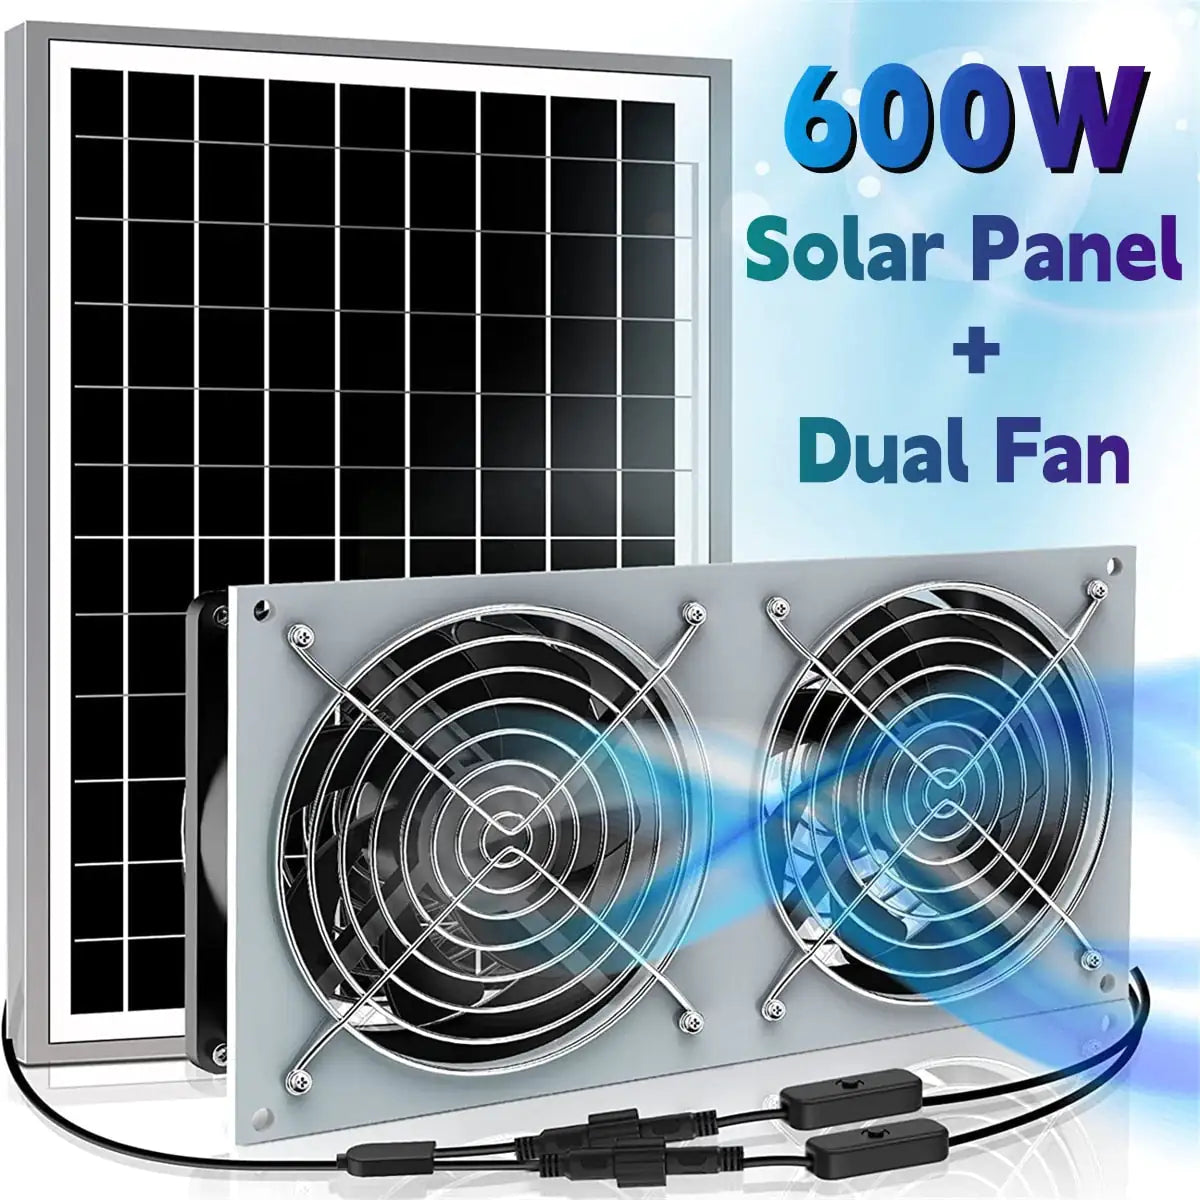 Solar Power Ventilation Fan $179.99 THIS WEEK! LIMITED QUANTITY!